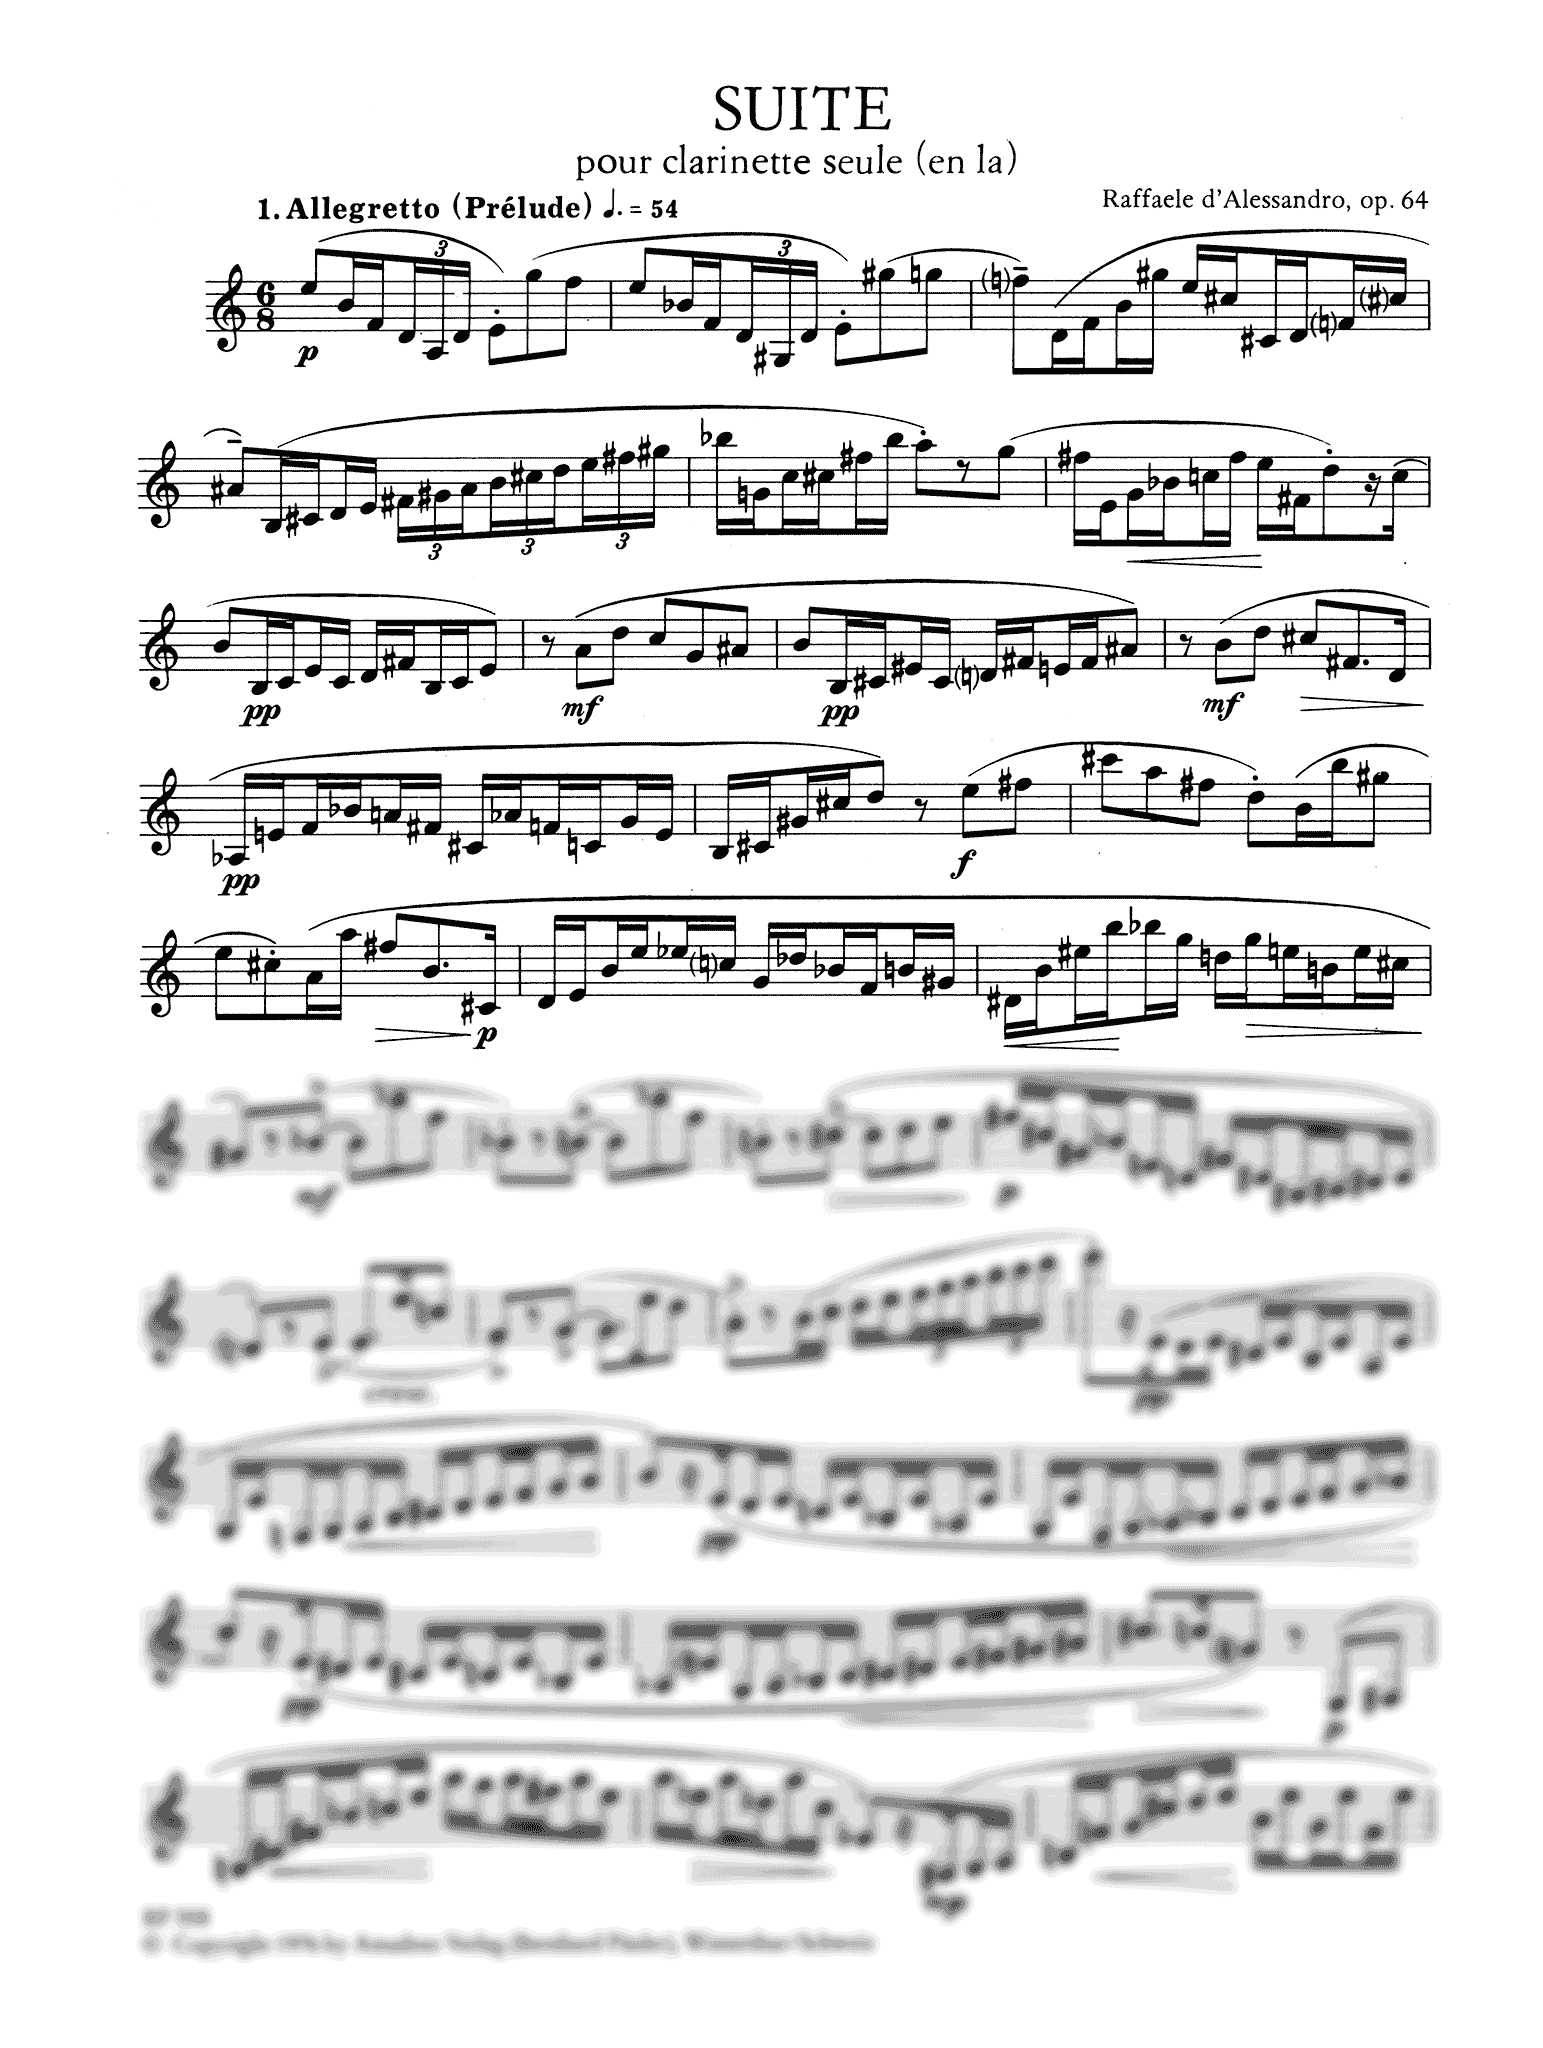 Raffaele d’Alessandro Suite for Solo Clarinet, Op. 64 - Movement 1